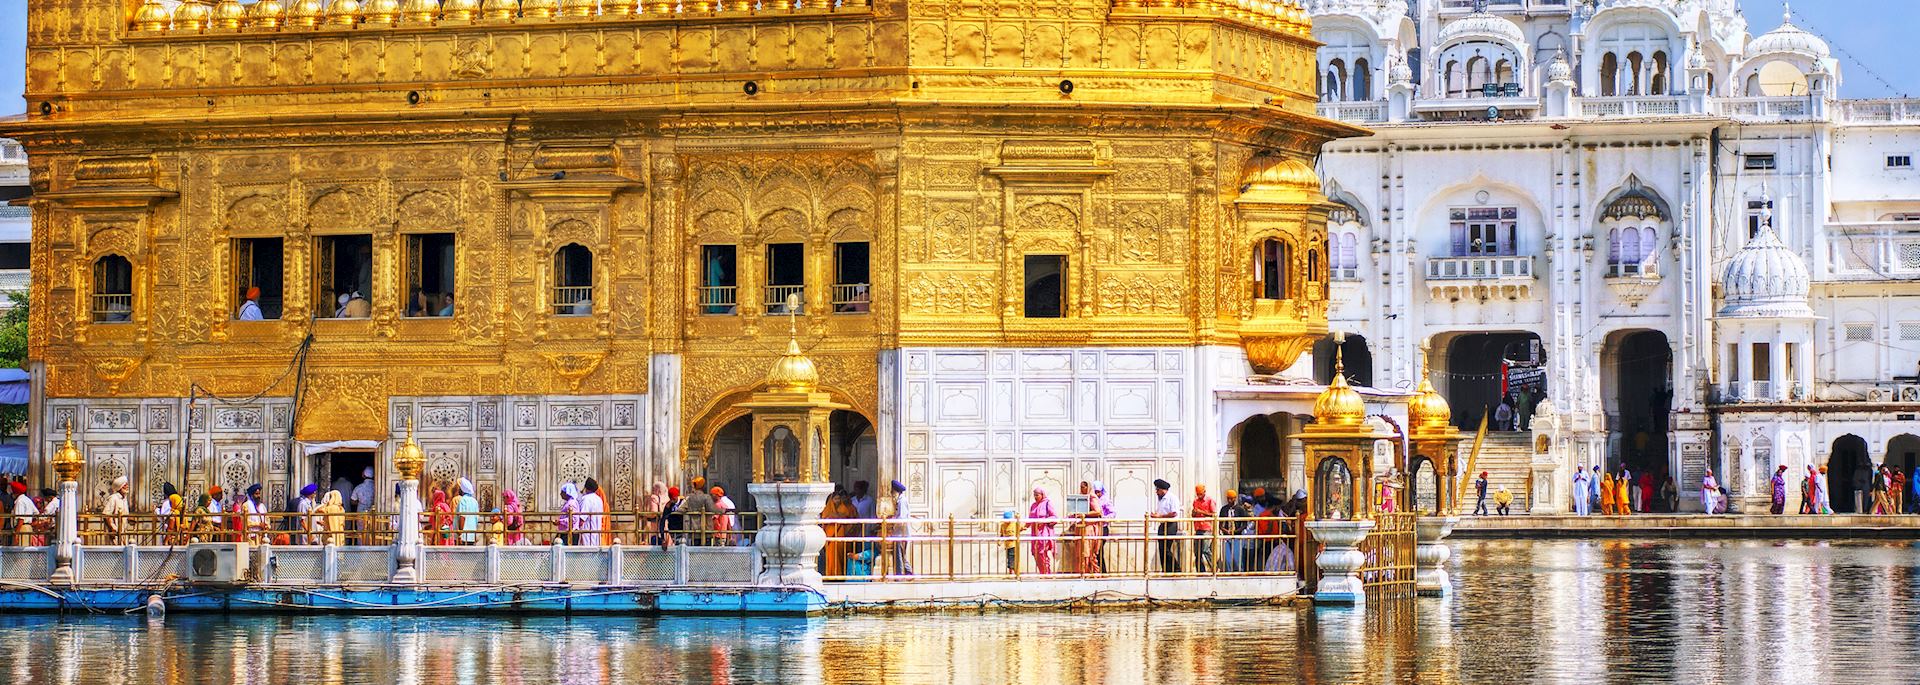 Amritsar's Golden Temple